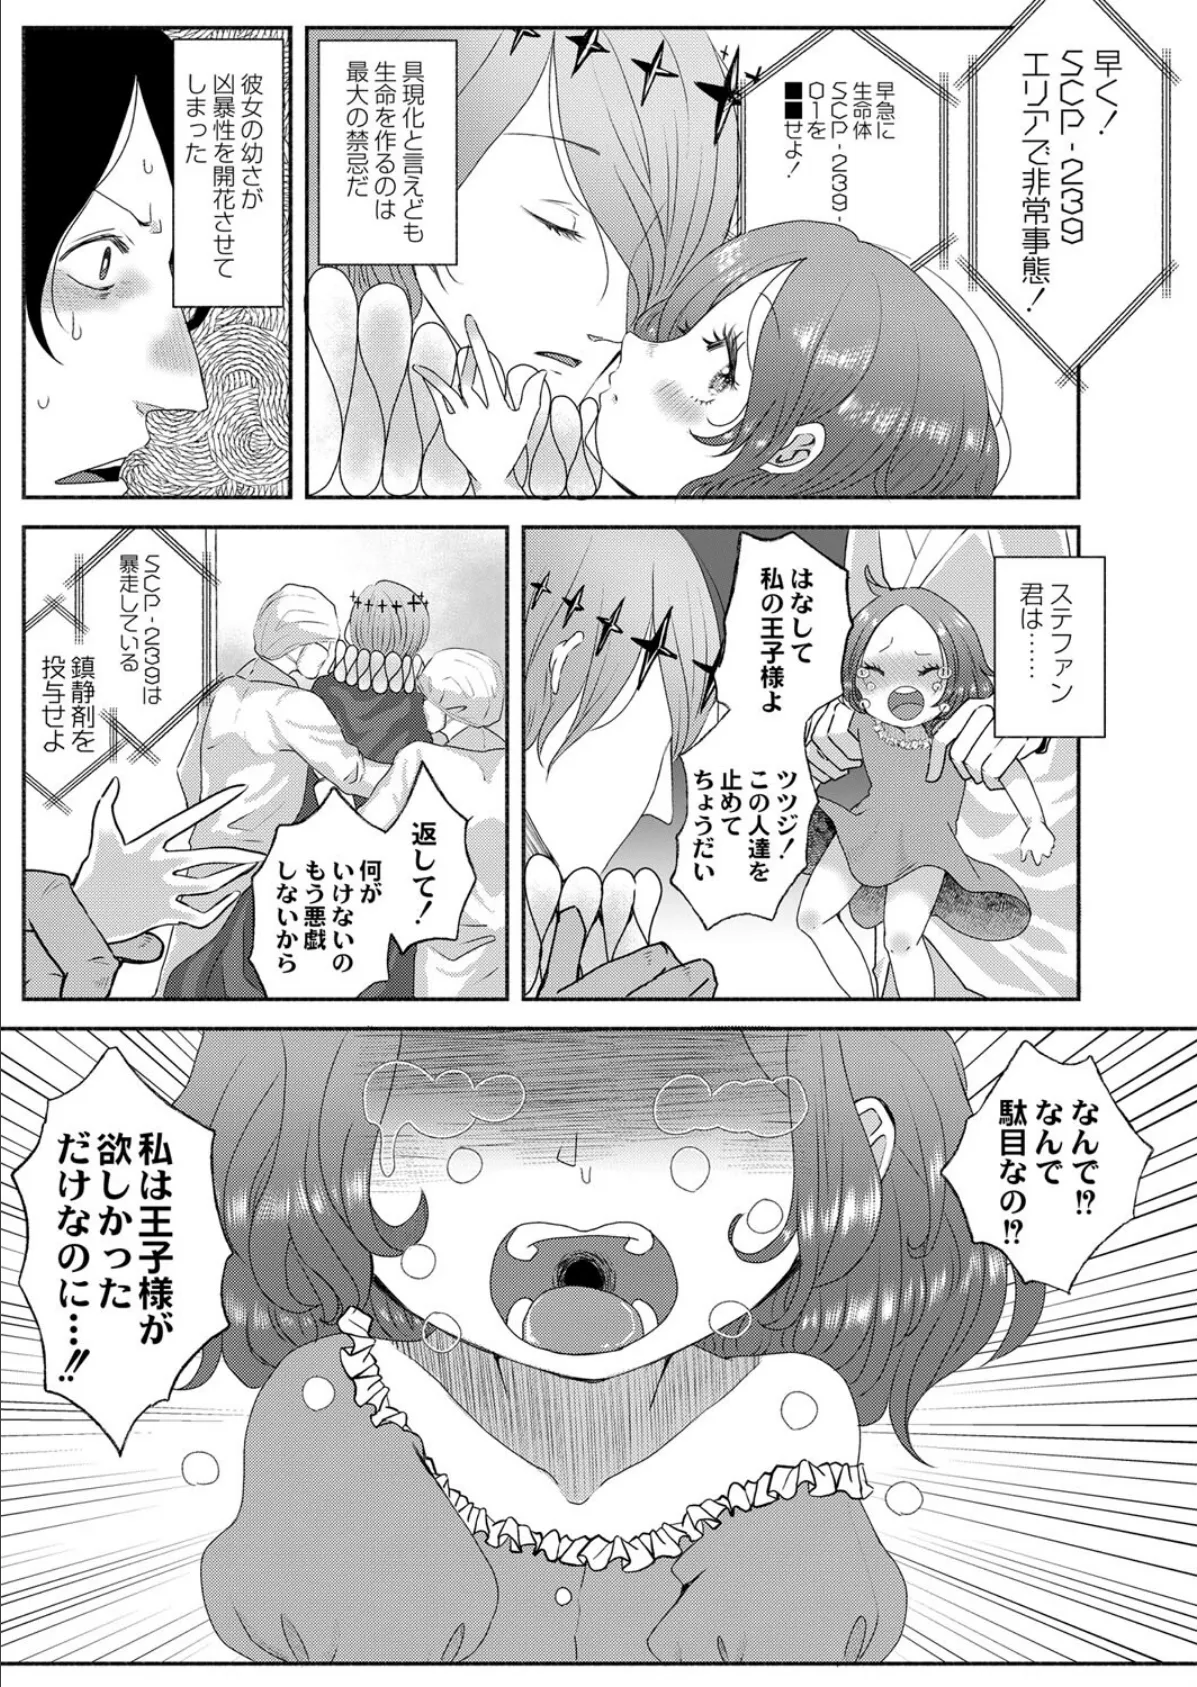 SCP-239-jp 小さな魔女 5ページ